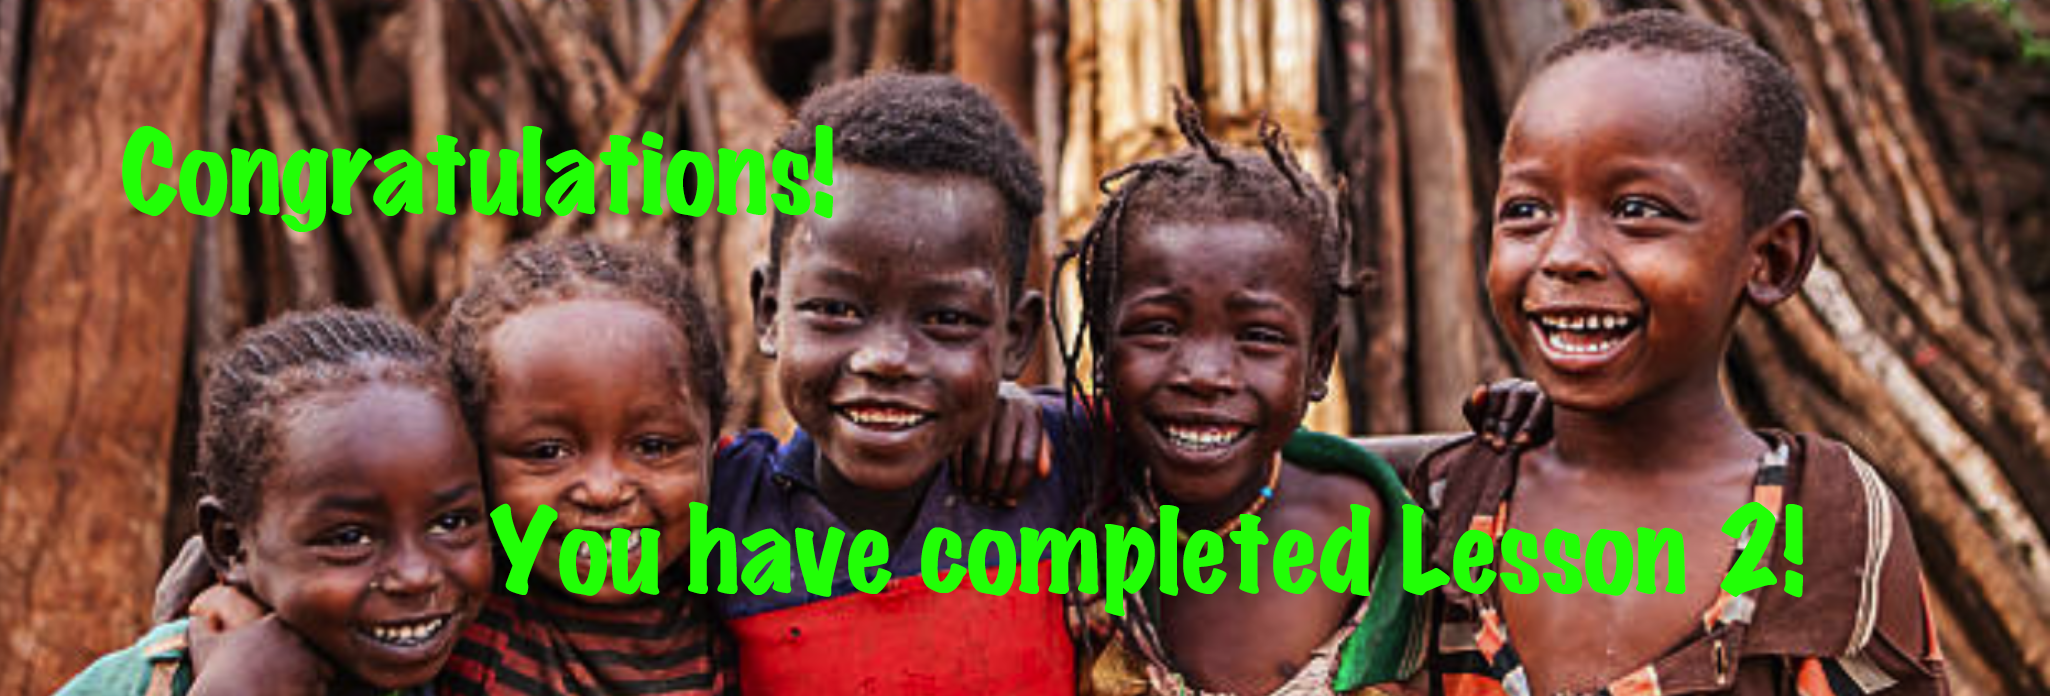 Happy children from Africa